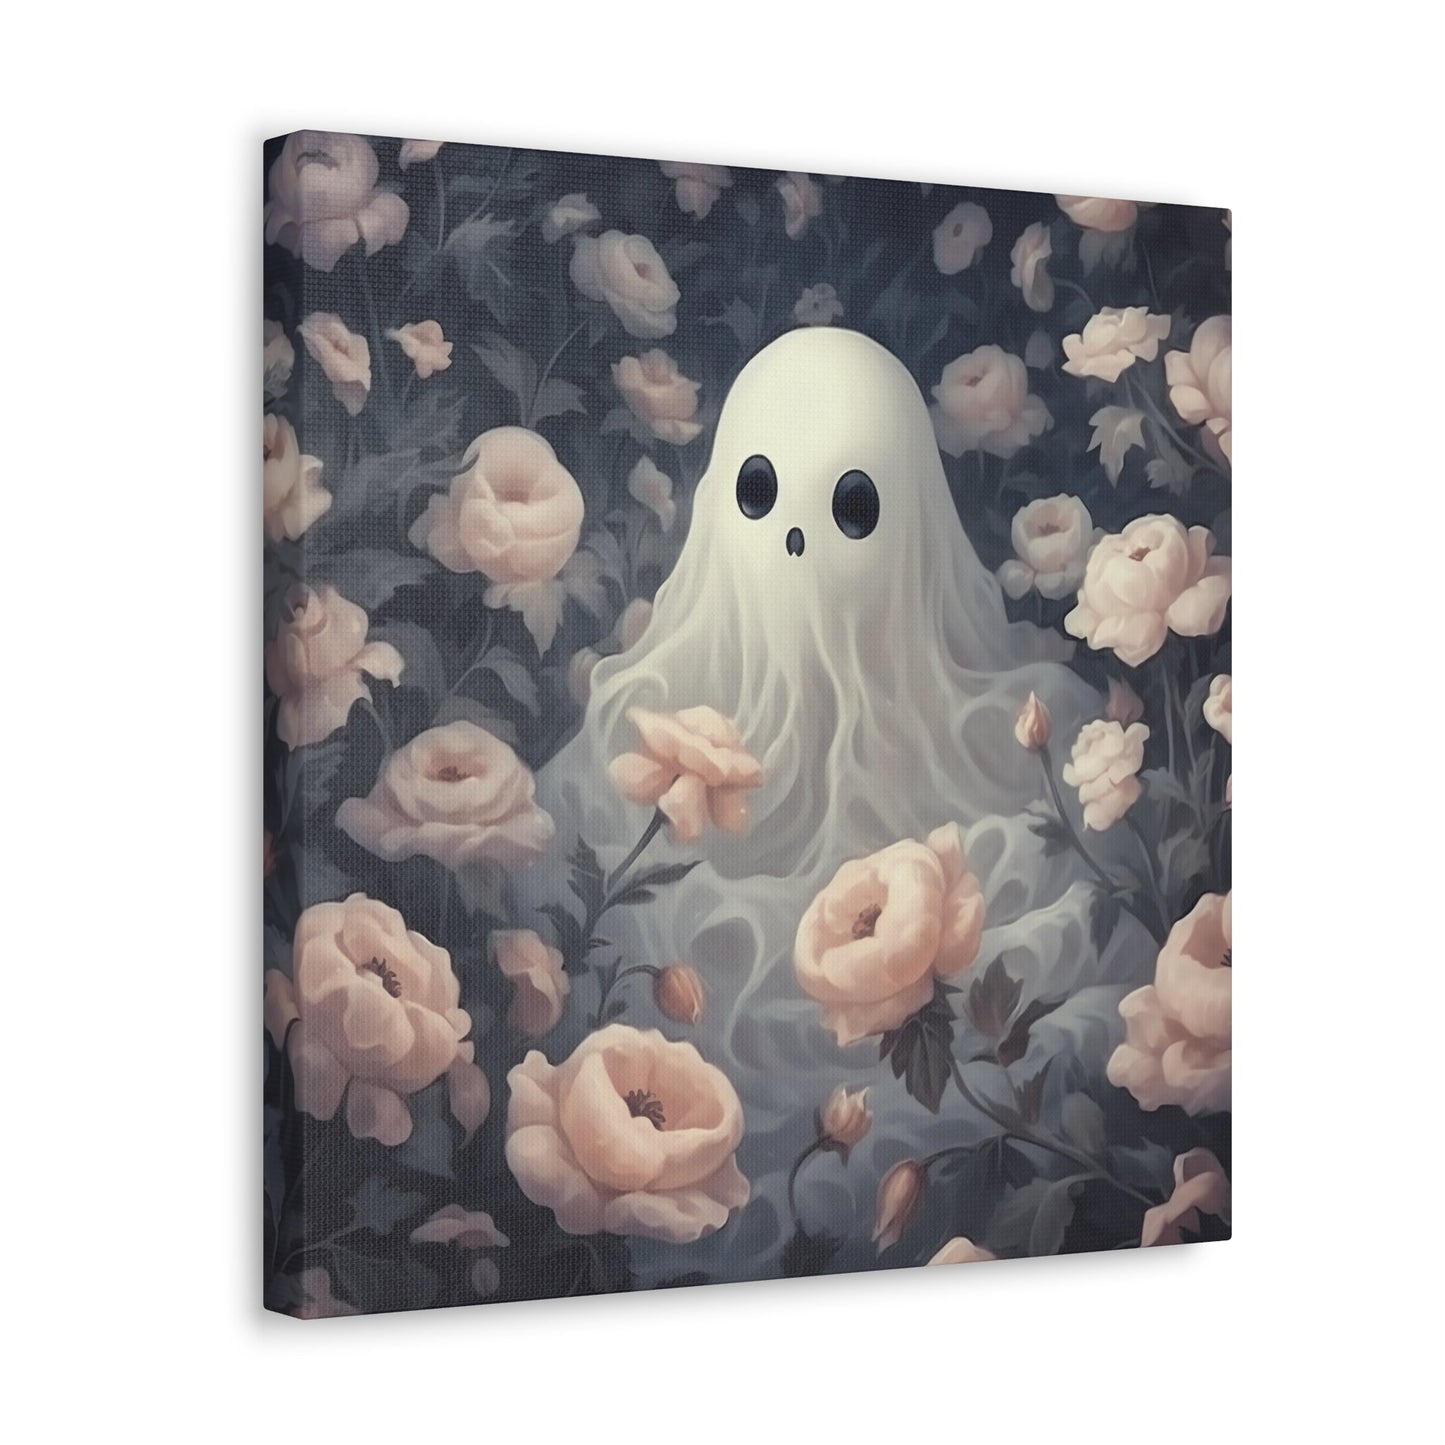 Cute Ghost in Rose Garden Canvas Gallery WrapCanvasVTZdesigns16″ x 16″1.25"Art & Wall DecorCanvasFall Picks